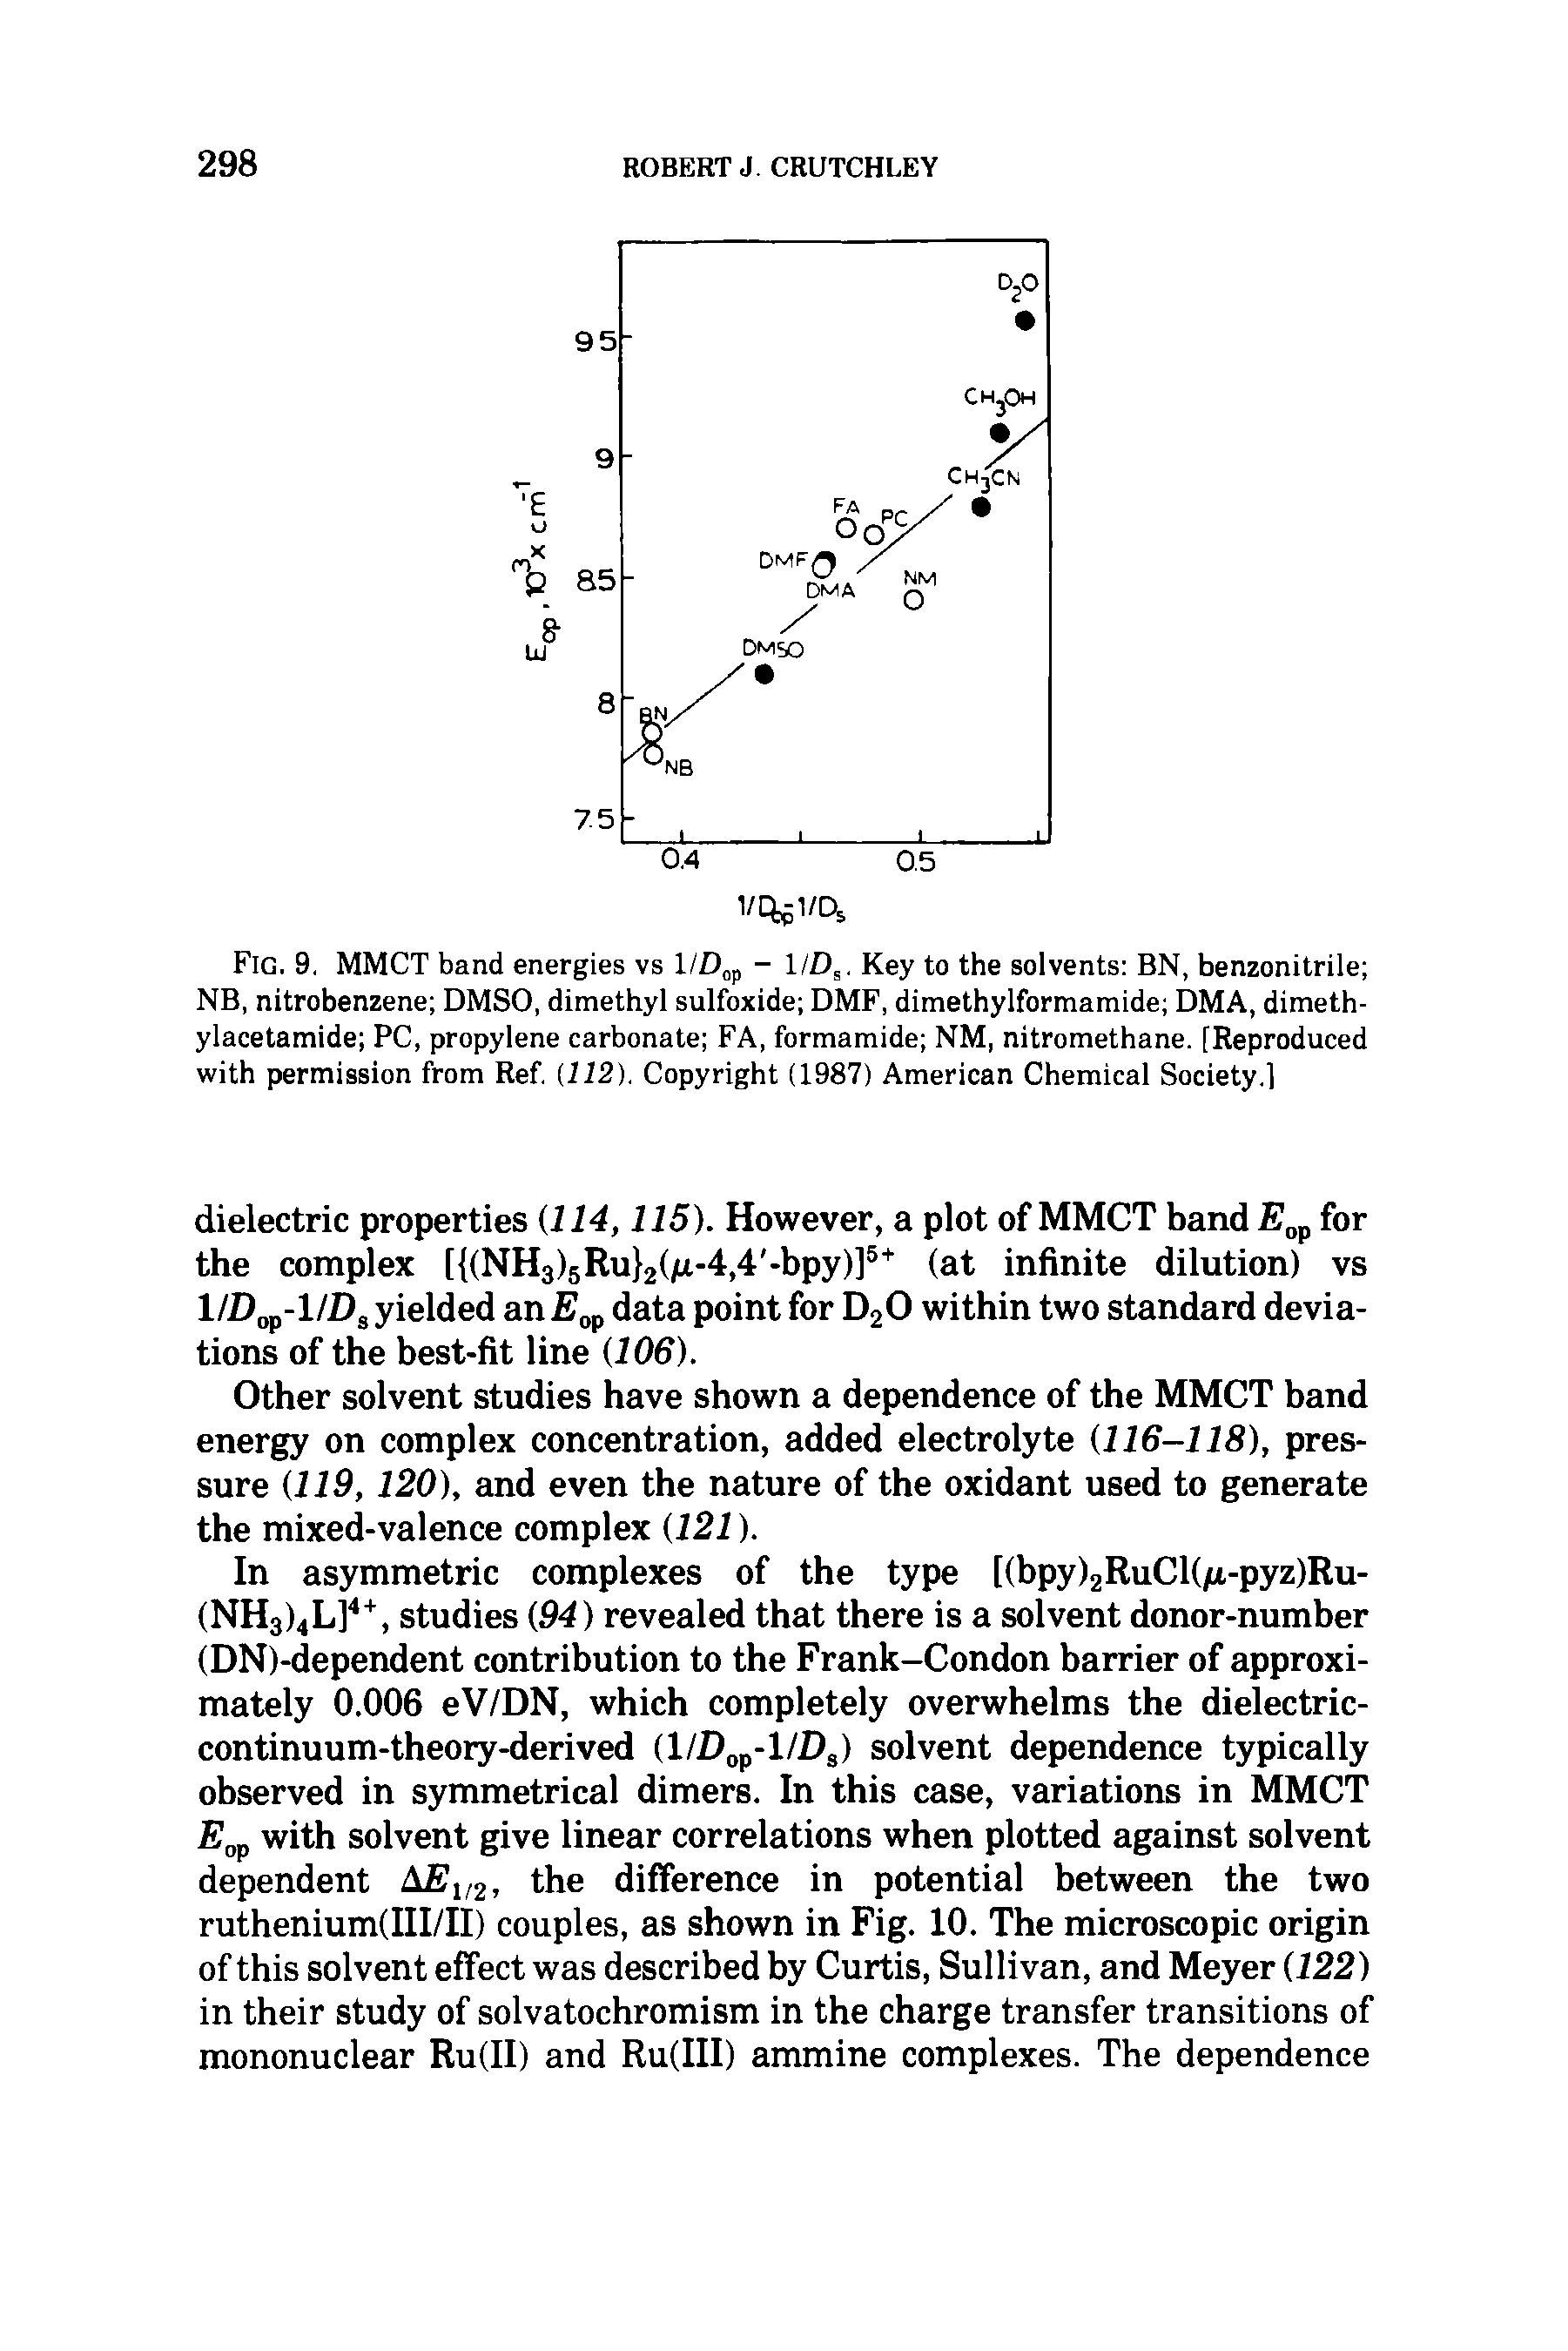 Fig. 9. MMCT band energies vs 1 /Dop - 1/DS. Key to the solvents BN, benzonitrile NB, nitrobenzene DMSO, dimethyl sulfoxide DMF, dimethylformamide DMA, dimeth-ylacetamide PC, propylene carbonate FA, formamide NM, nitromethane. [Reproduced with permission from Ref. (112). Copyright (1987) American Chemical Society.1...